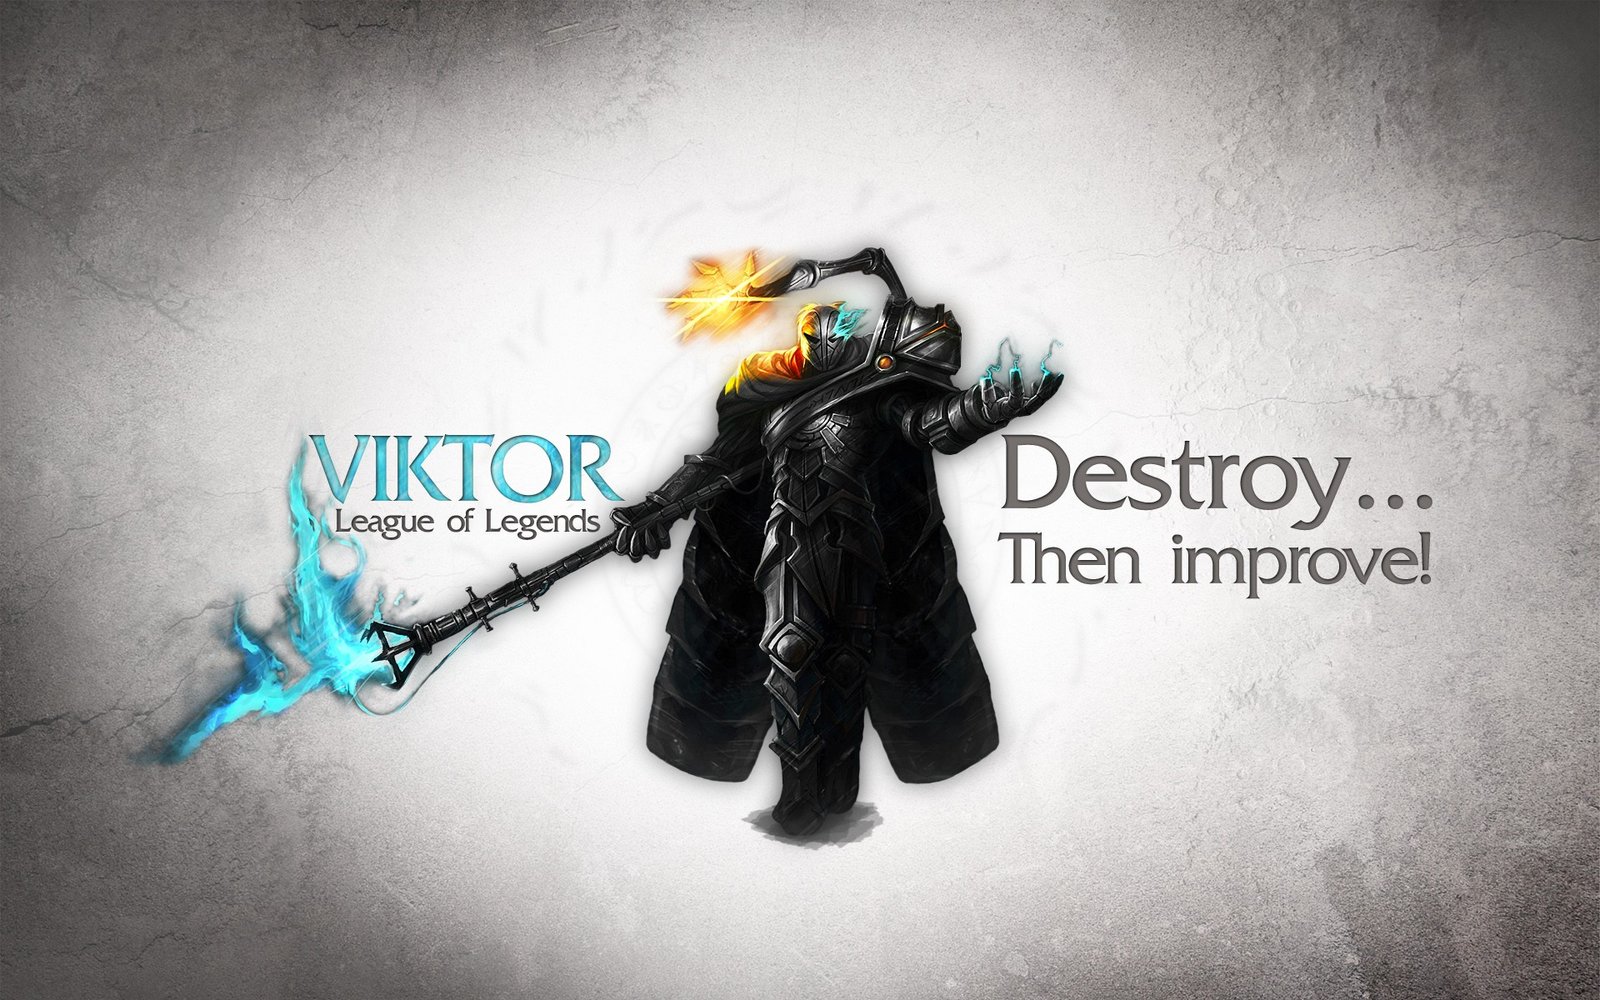 Viktor League of Legends